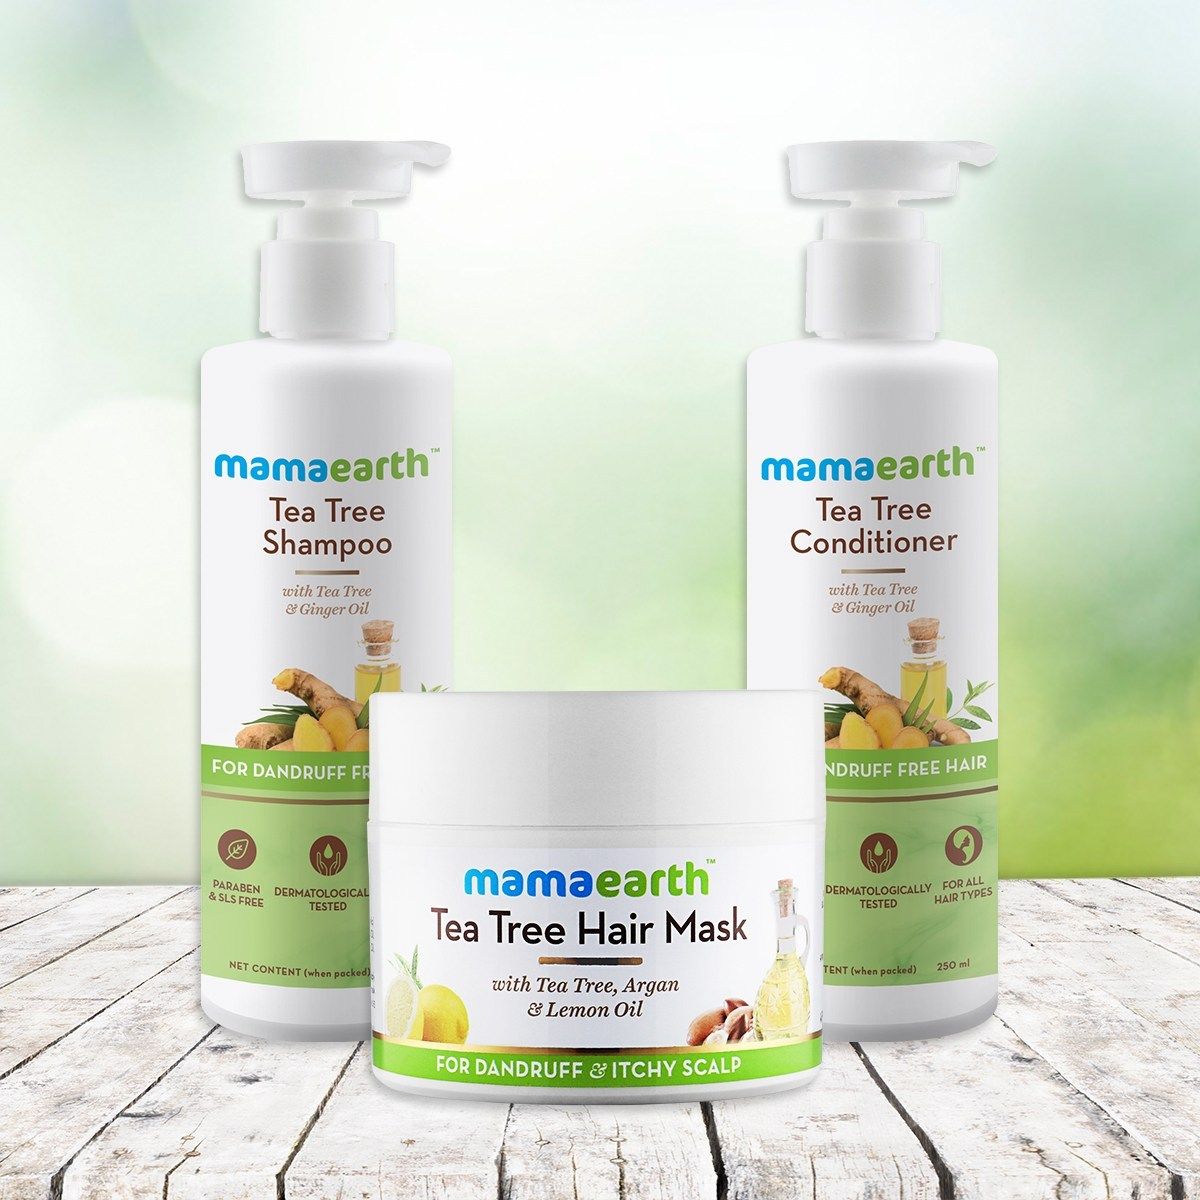 Mamaearth Onion Anti-Hair Fall Spa Kit New Packaging. | eBay